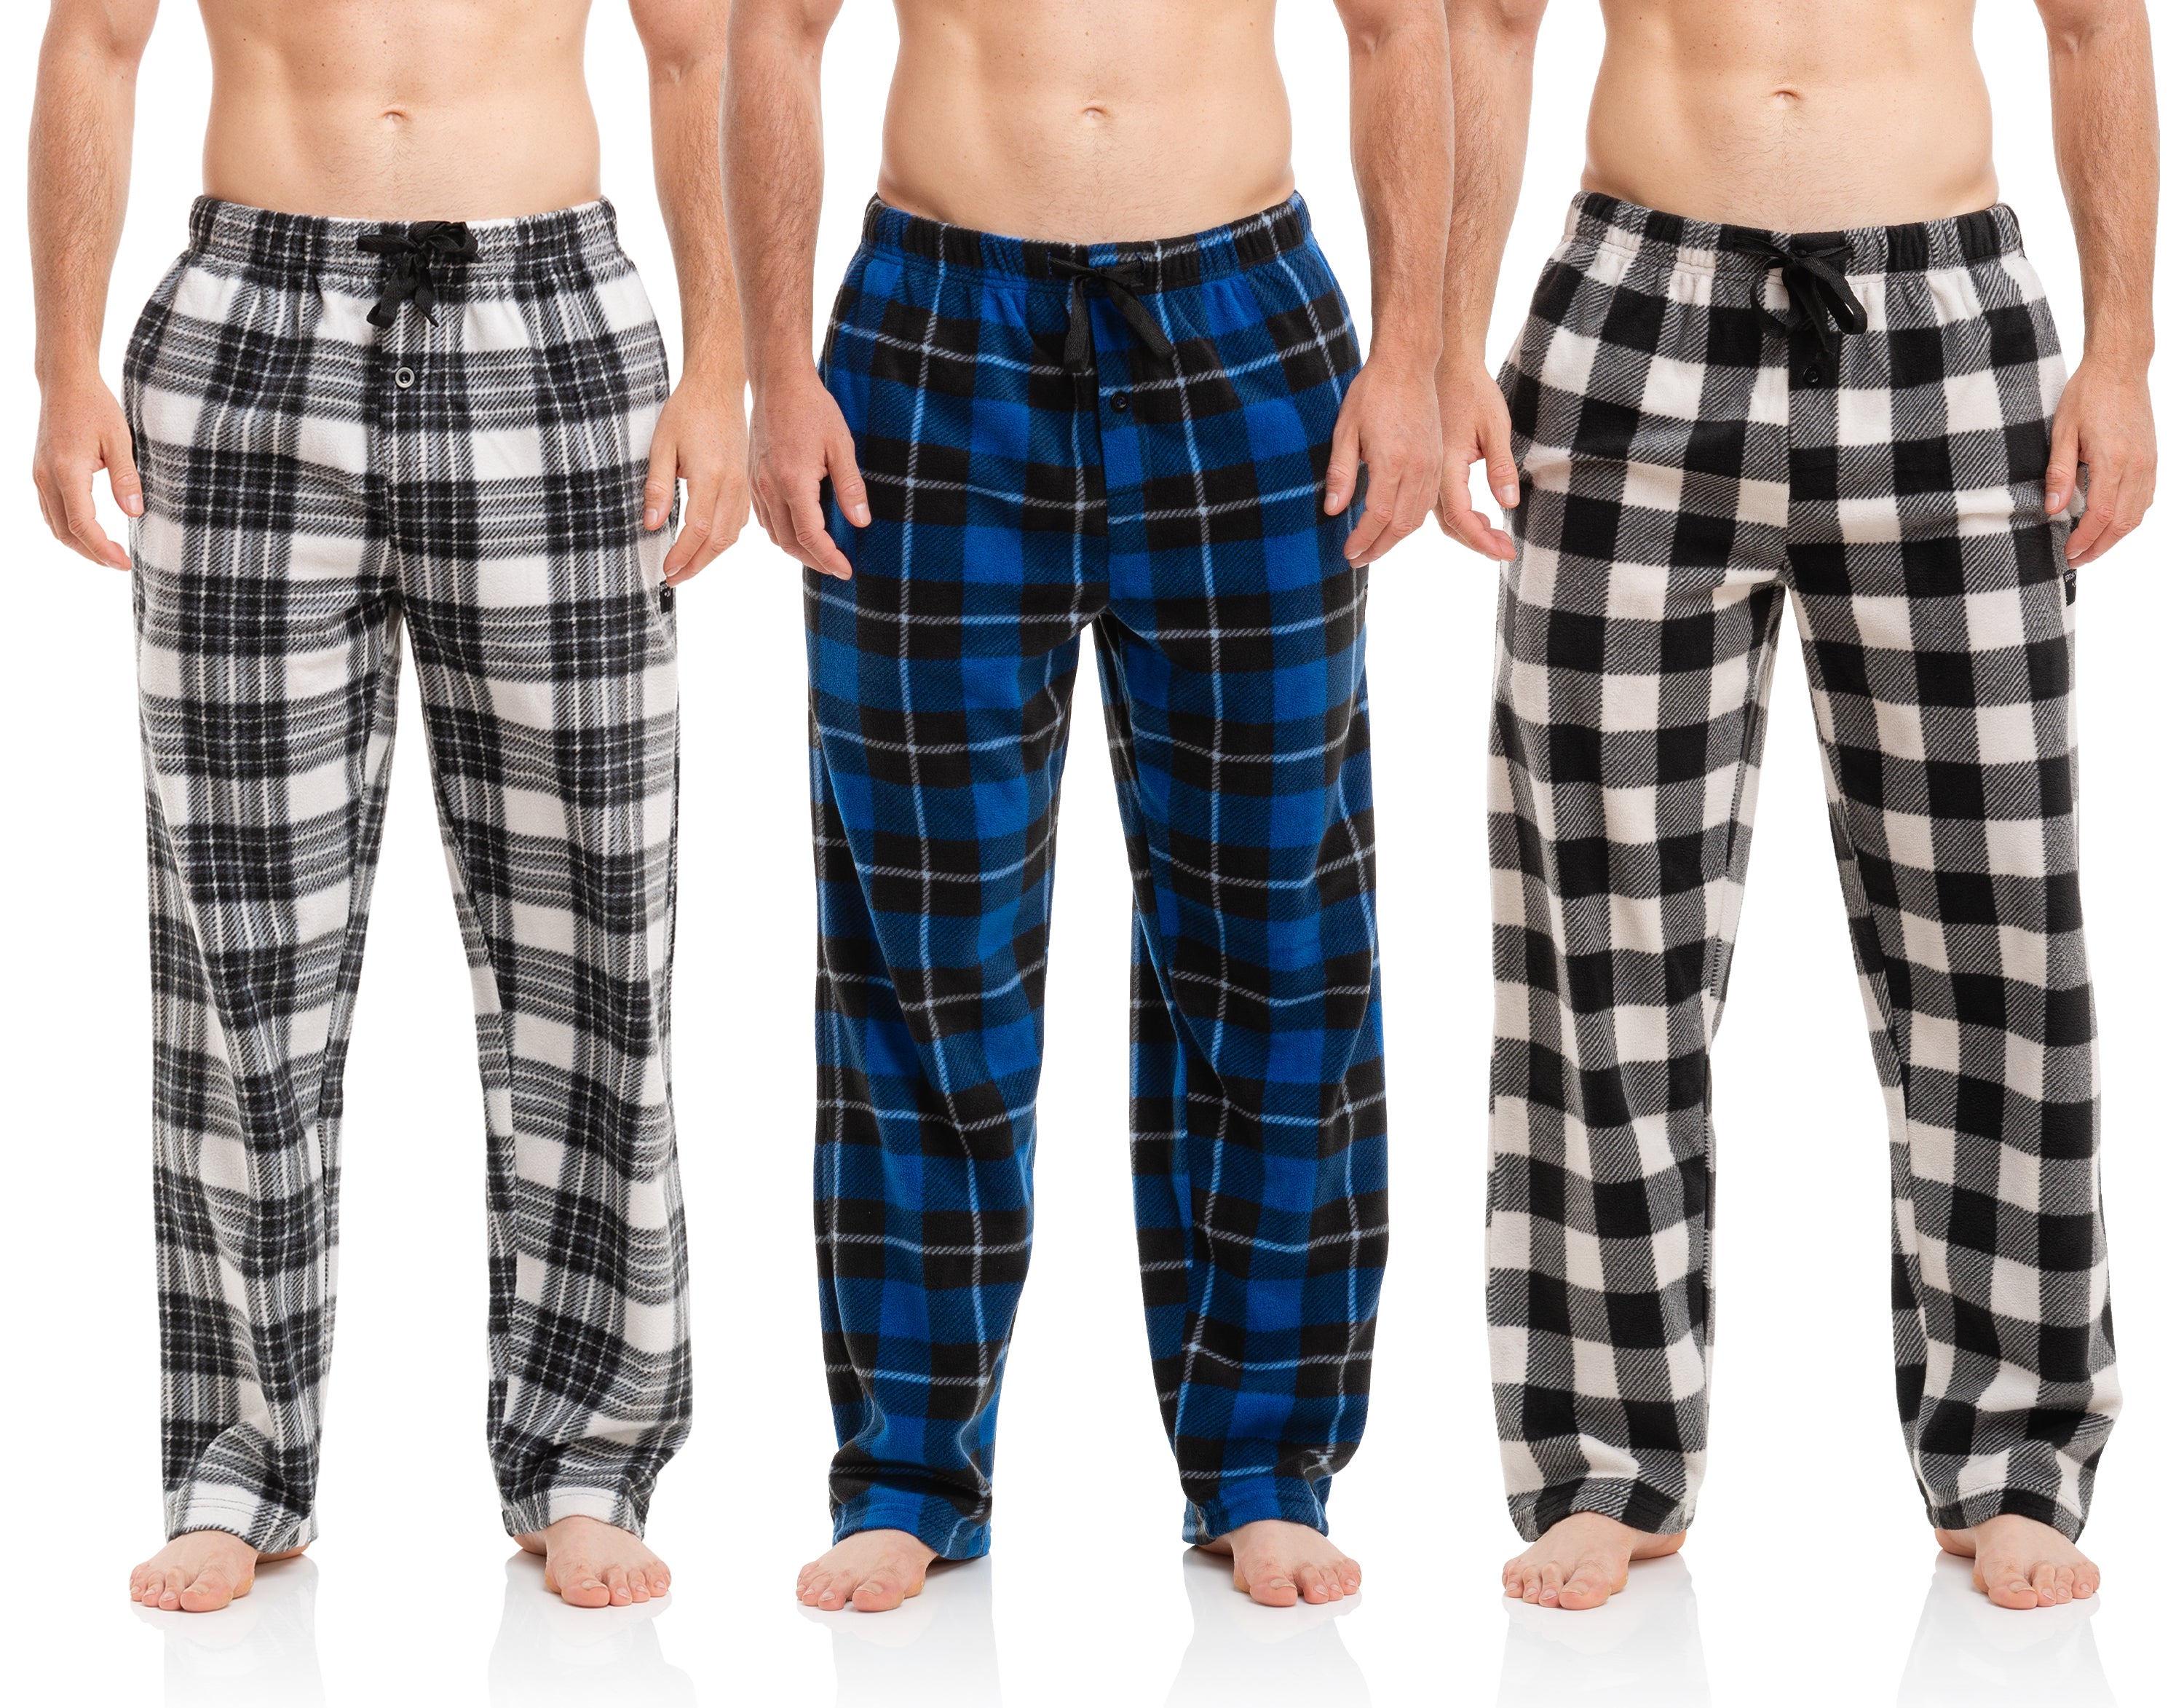 #followme Ultra Soft Fleece Men's Plaid Pajama Pants with Pockets